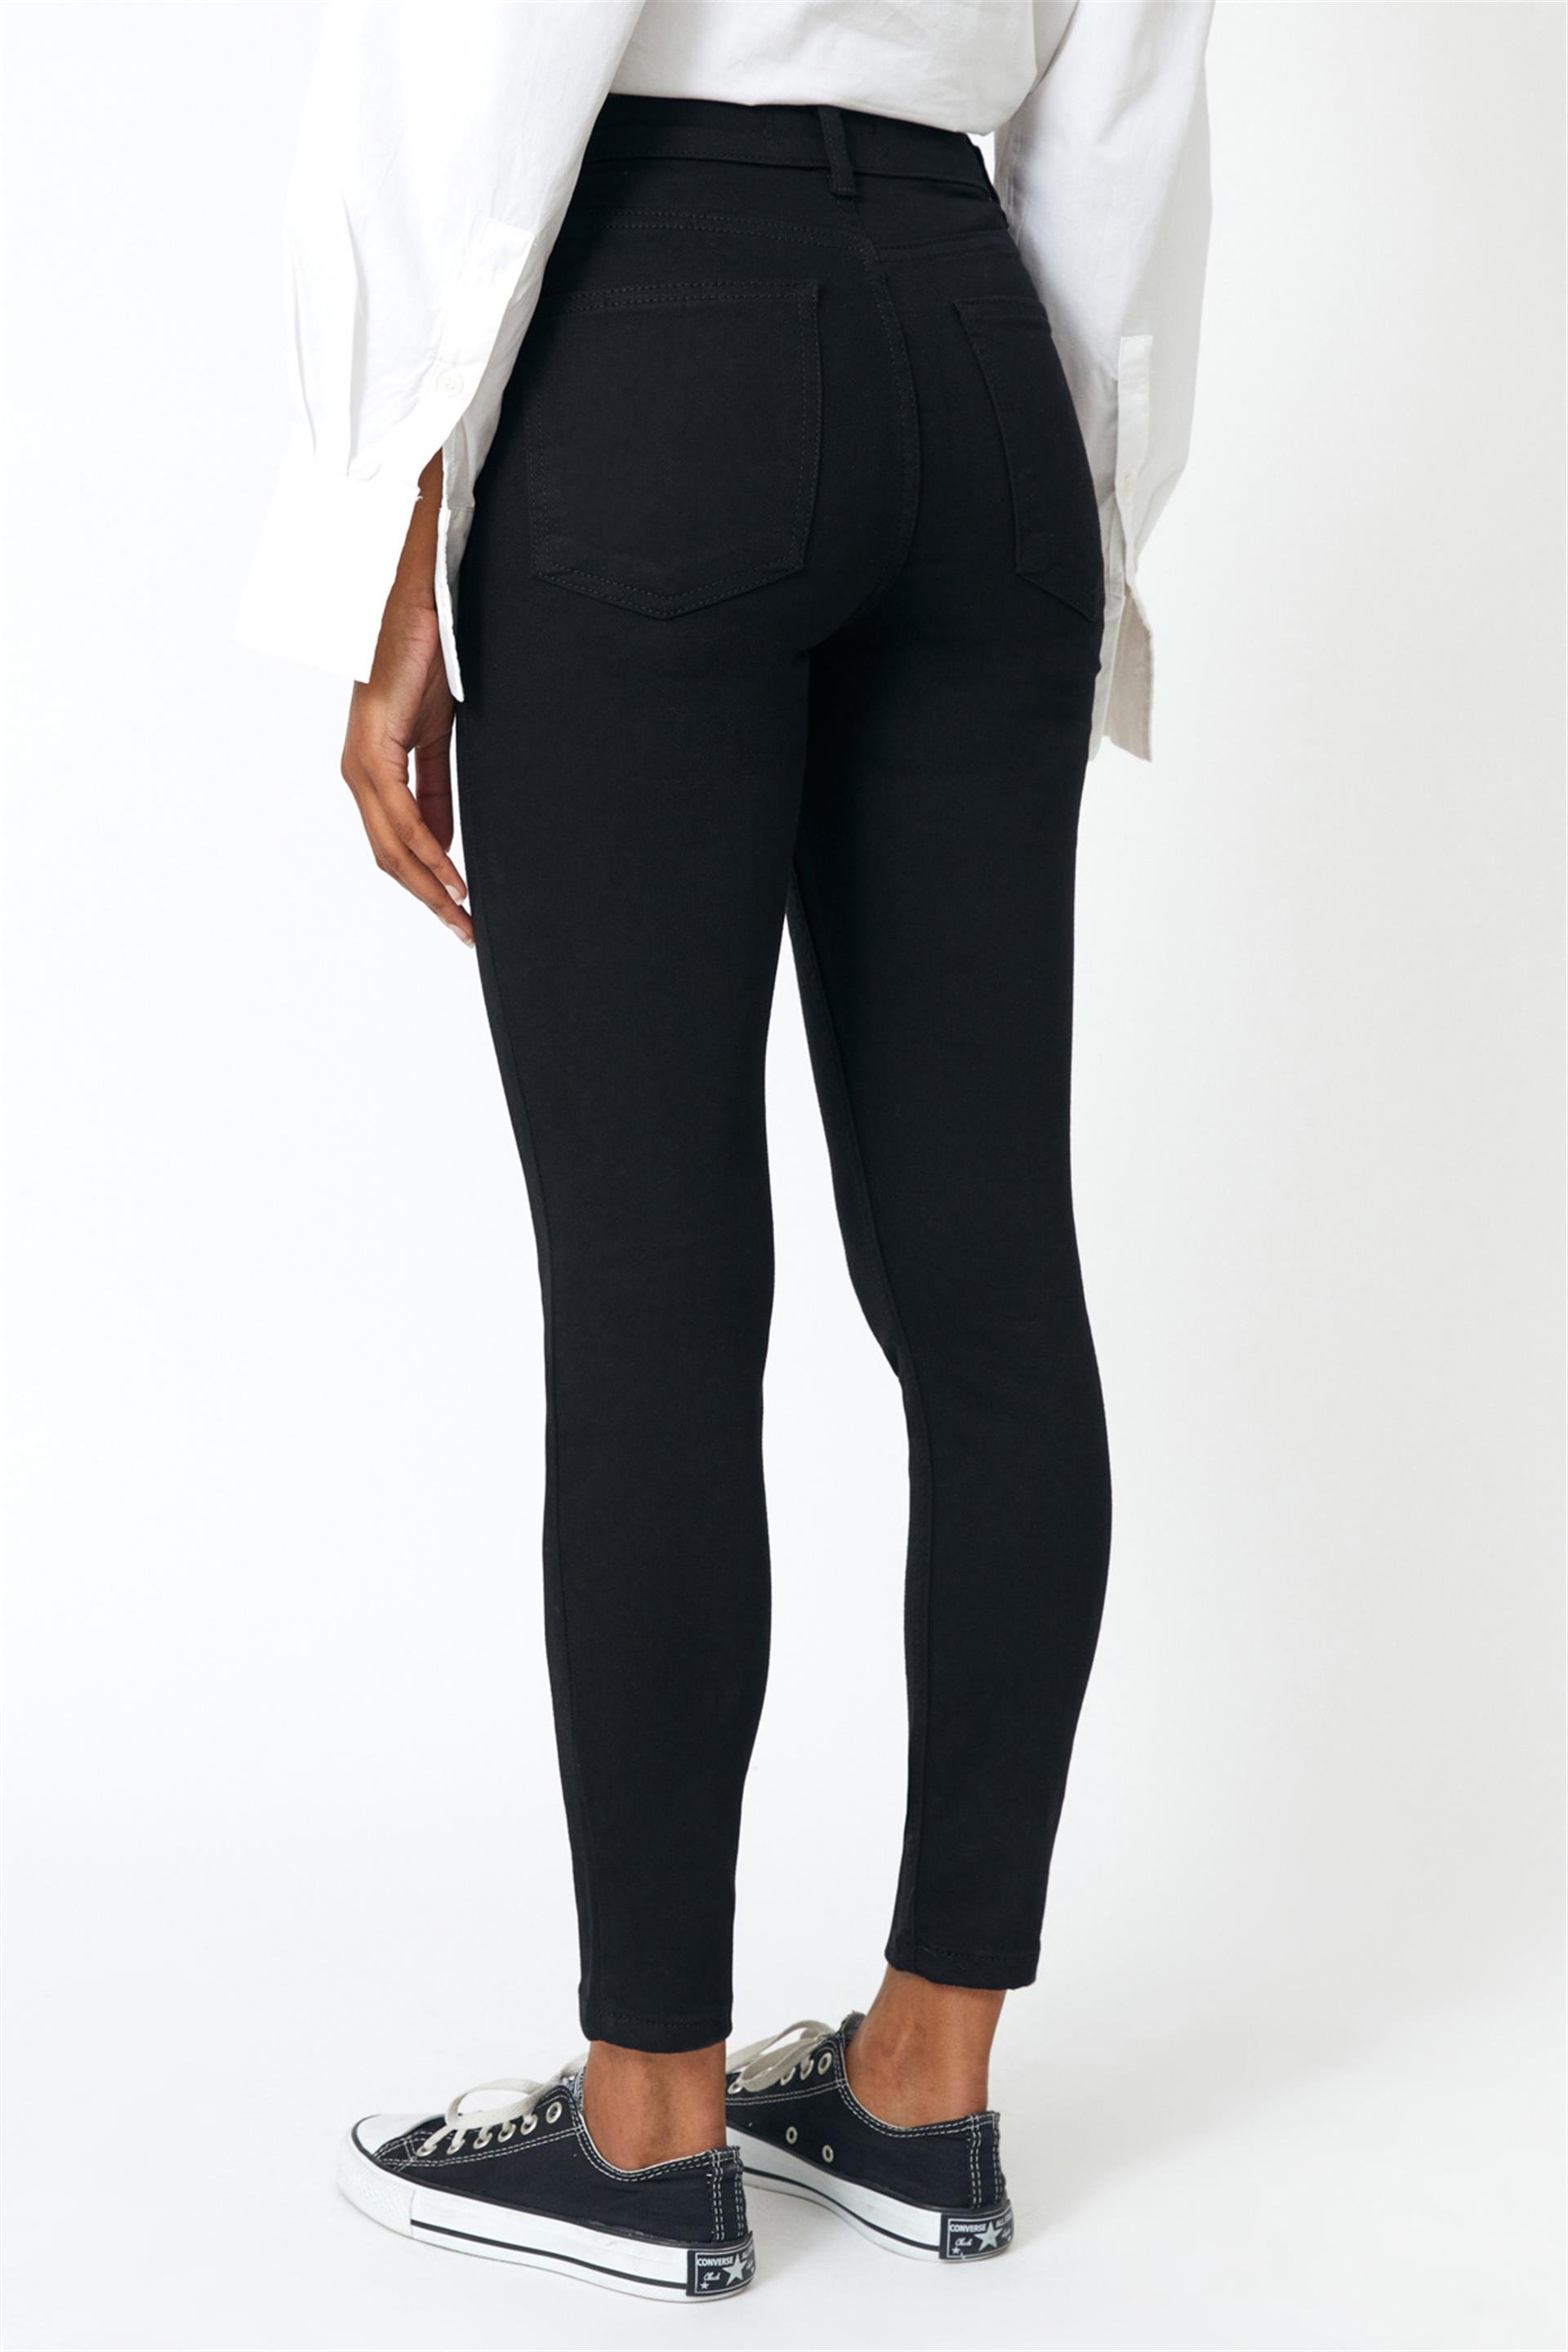 Pieces of Melon - Solmayan Siyah Yüksek Bel Skinny Jeans - Jeans Modelleri  - #Melonkadını